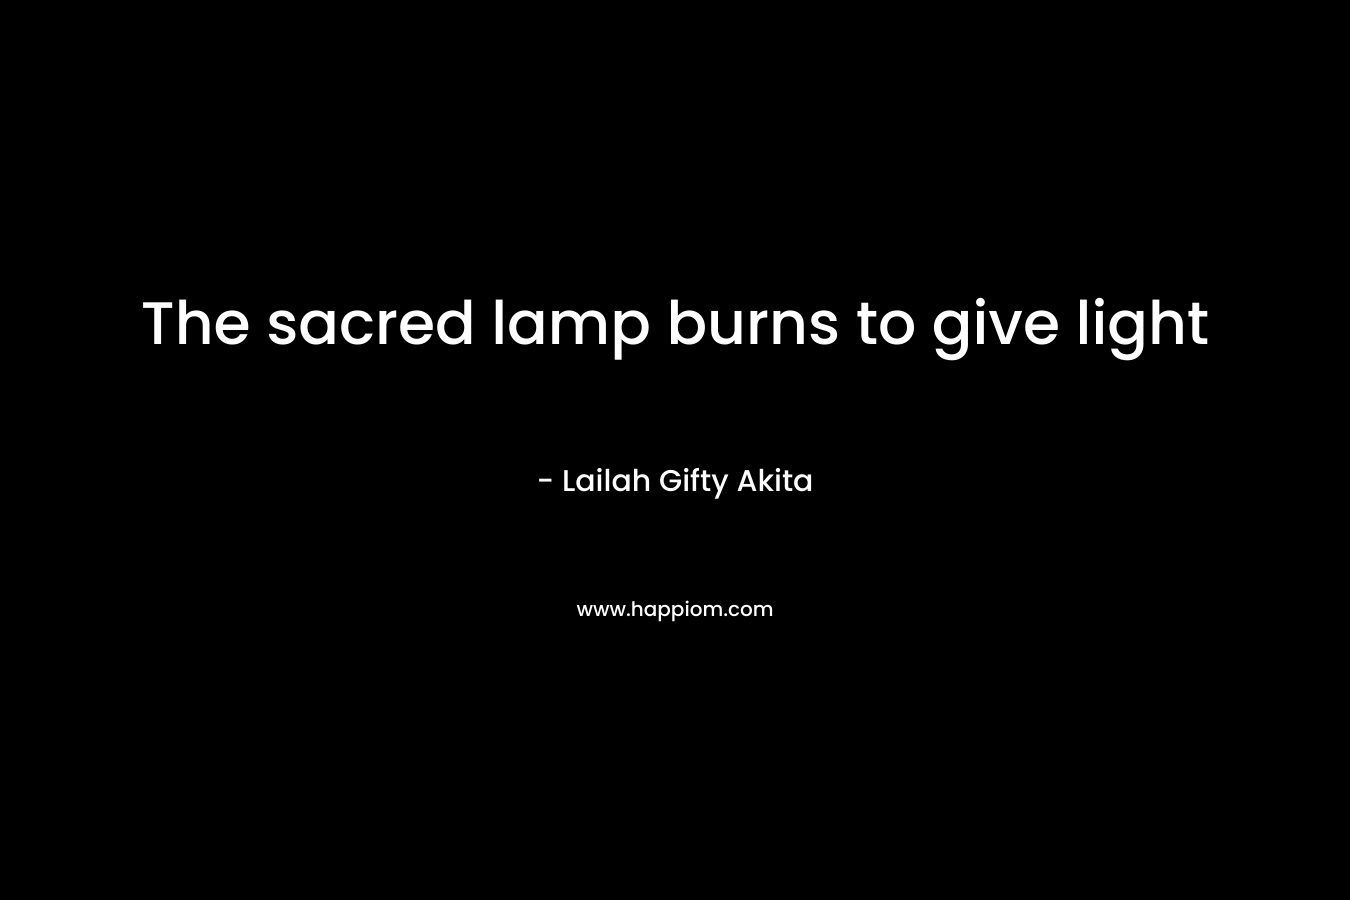 The sacred lamp burns to give light